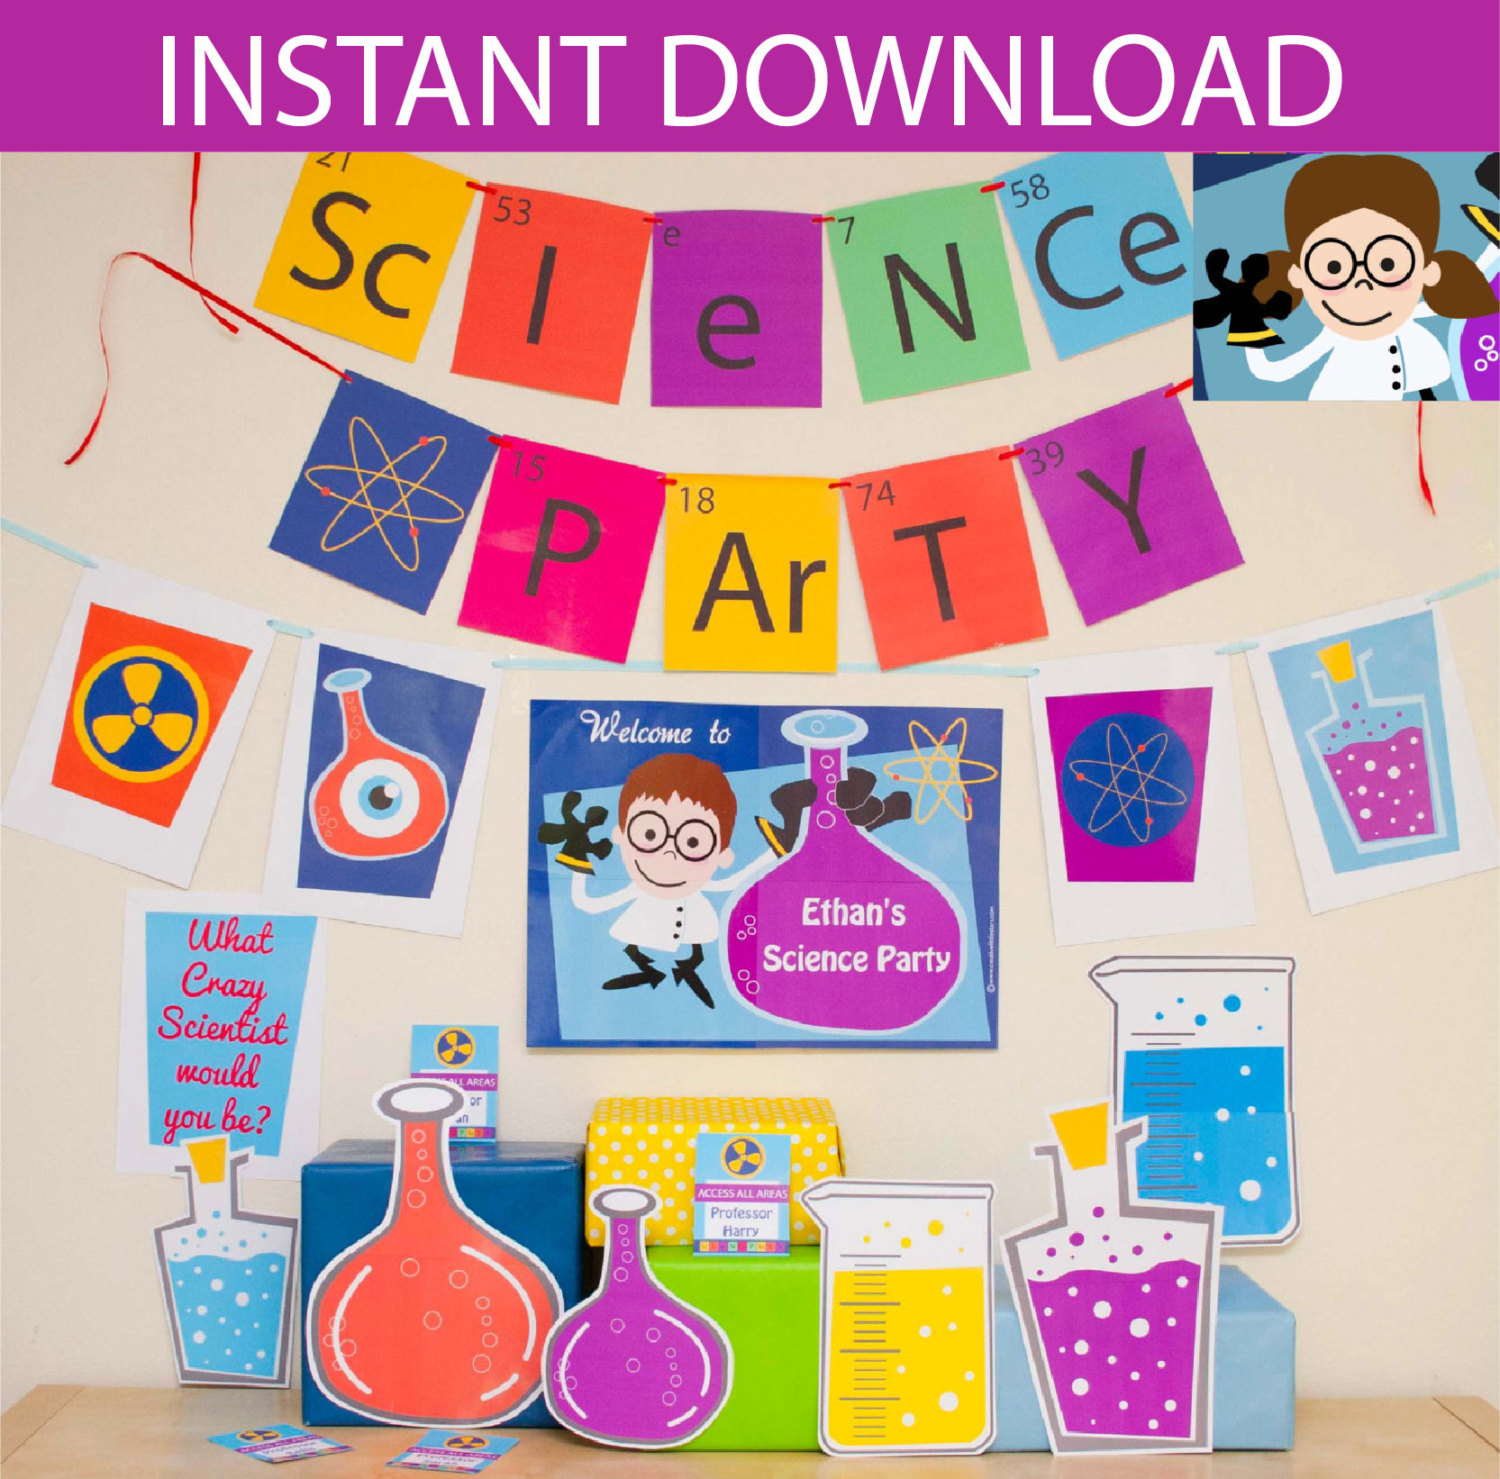 Bdffabcefda Superb Free Printable Science Birthday Party Invitations - Free Printable Science Birthday Party Invitations